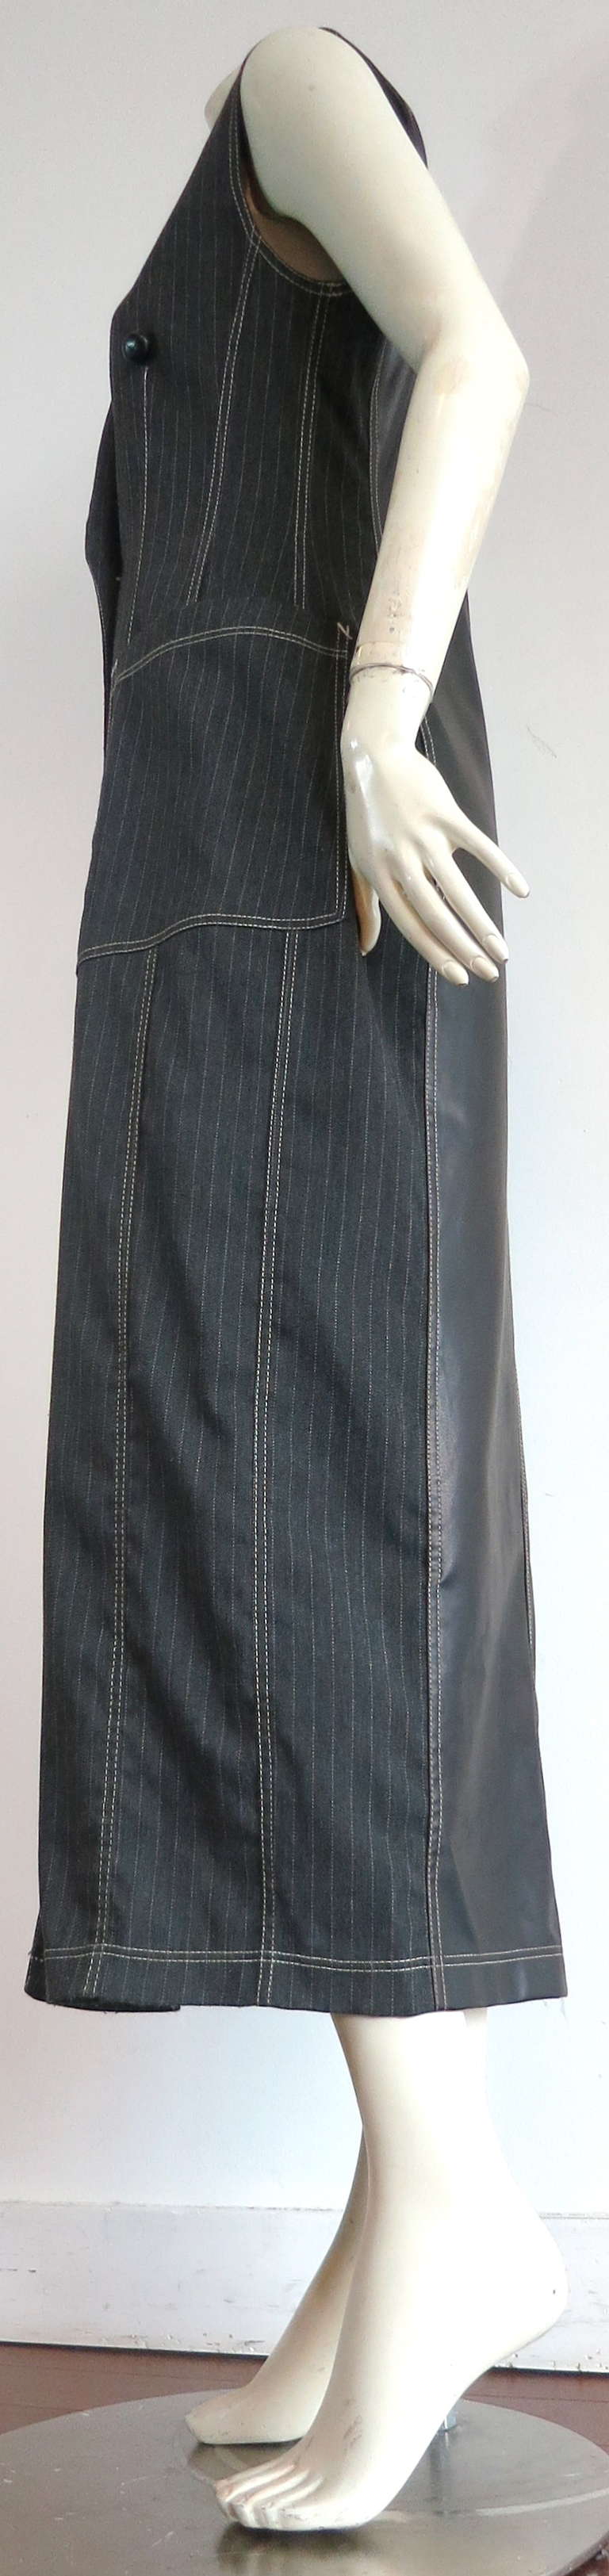 1980's GAULTIER Pinstripe coat dress For Sale 3